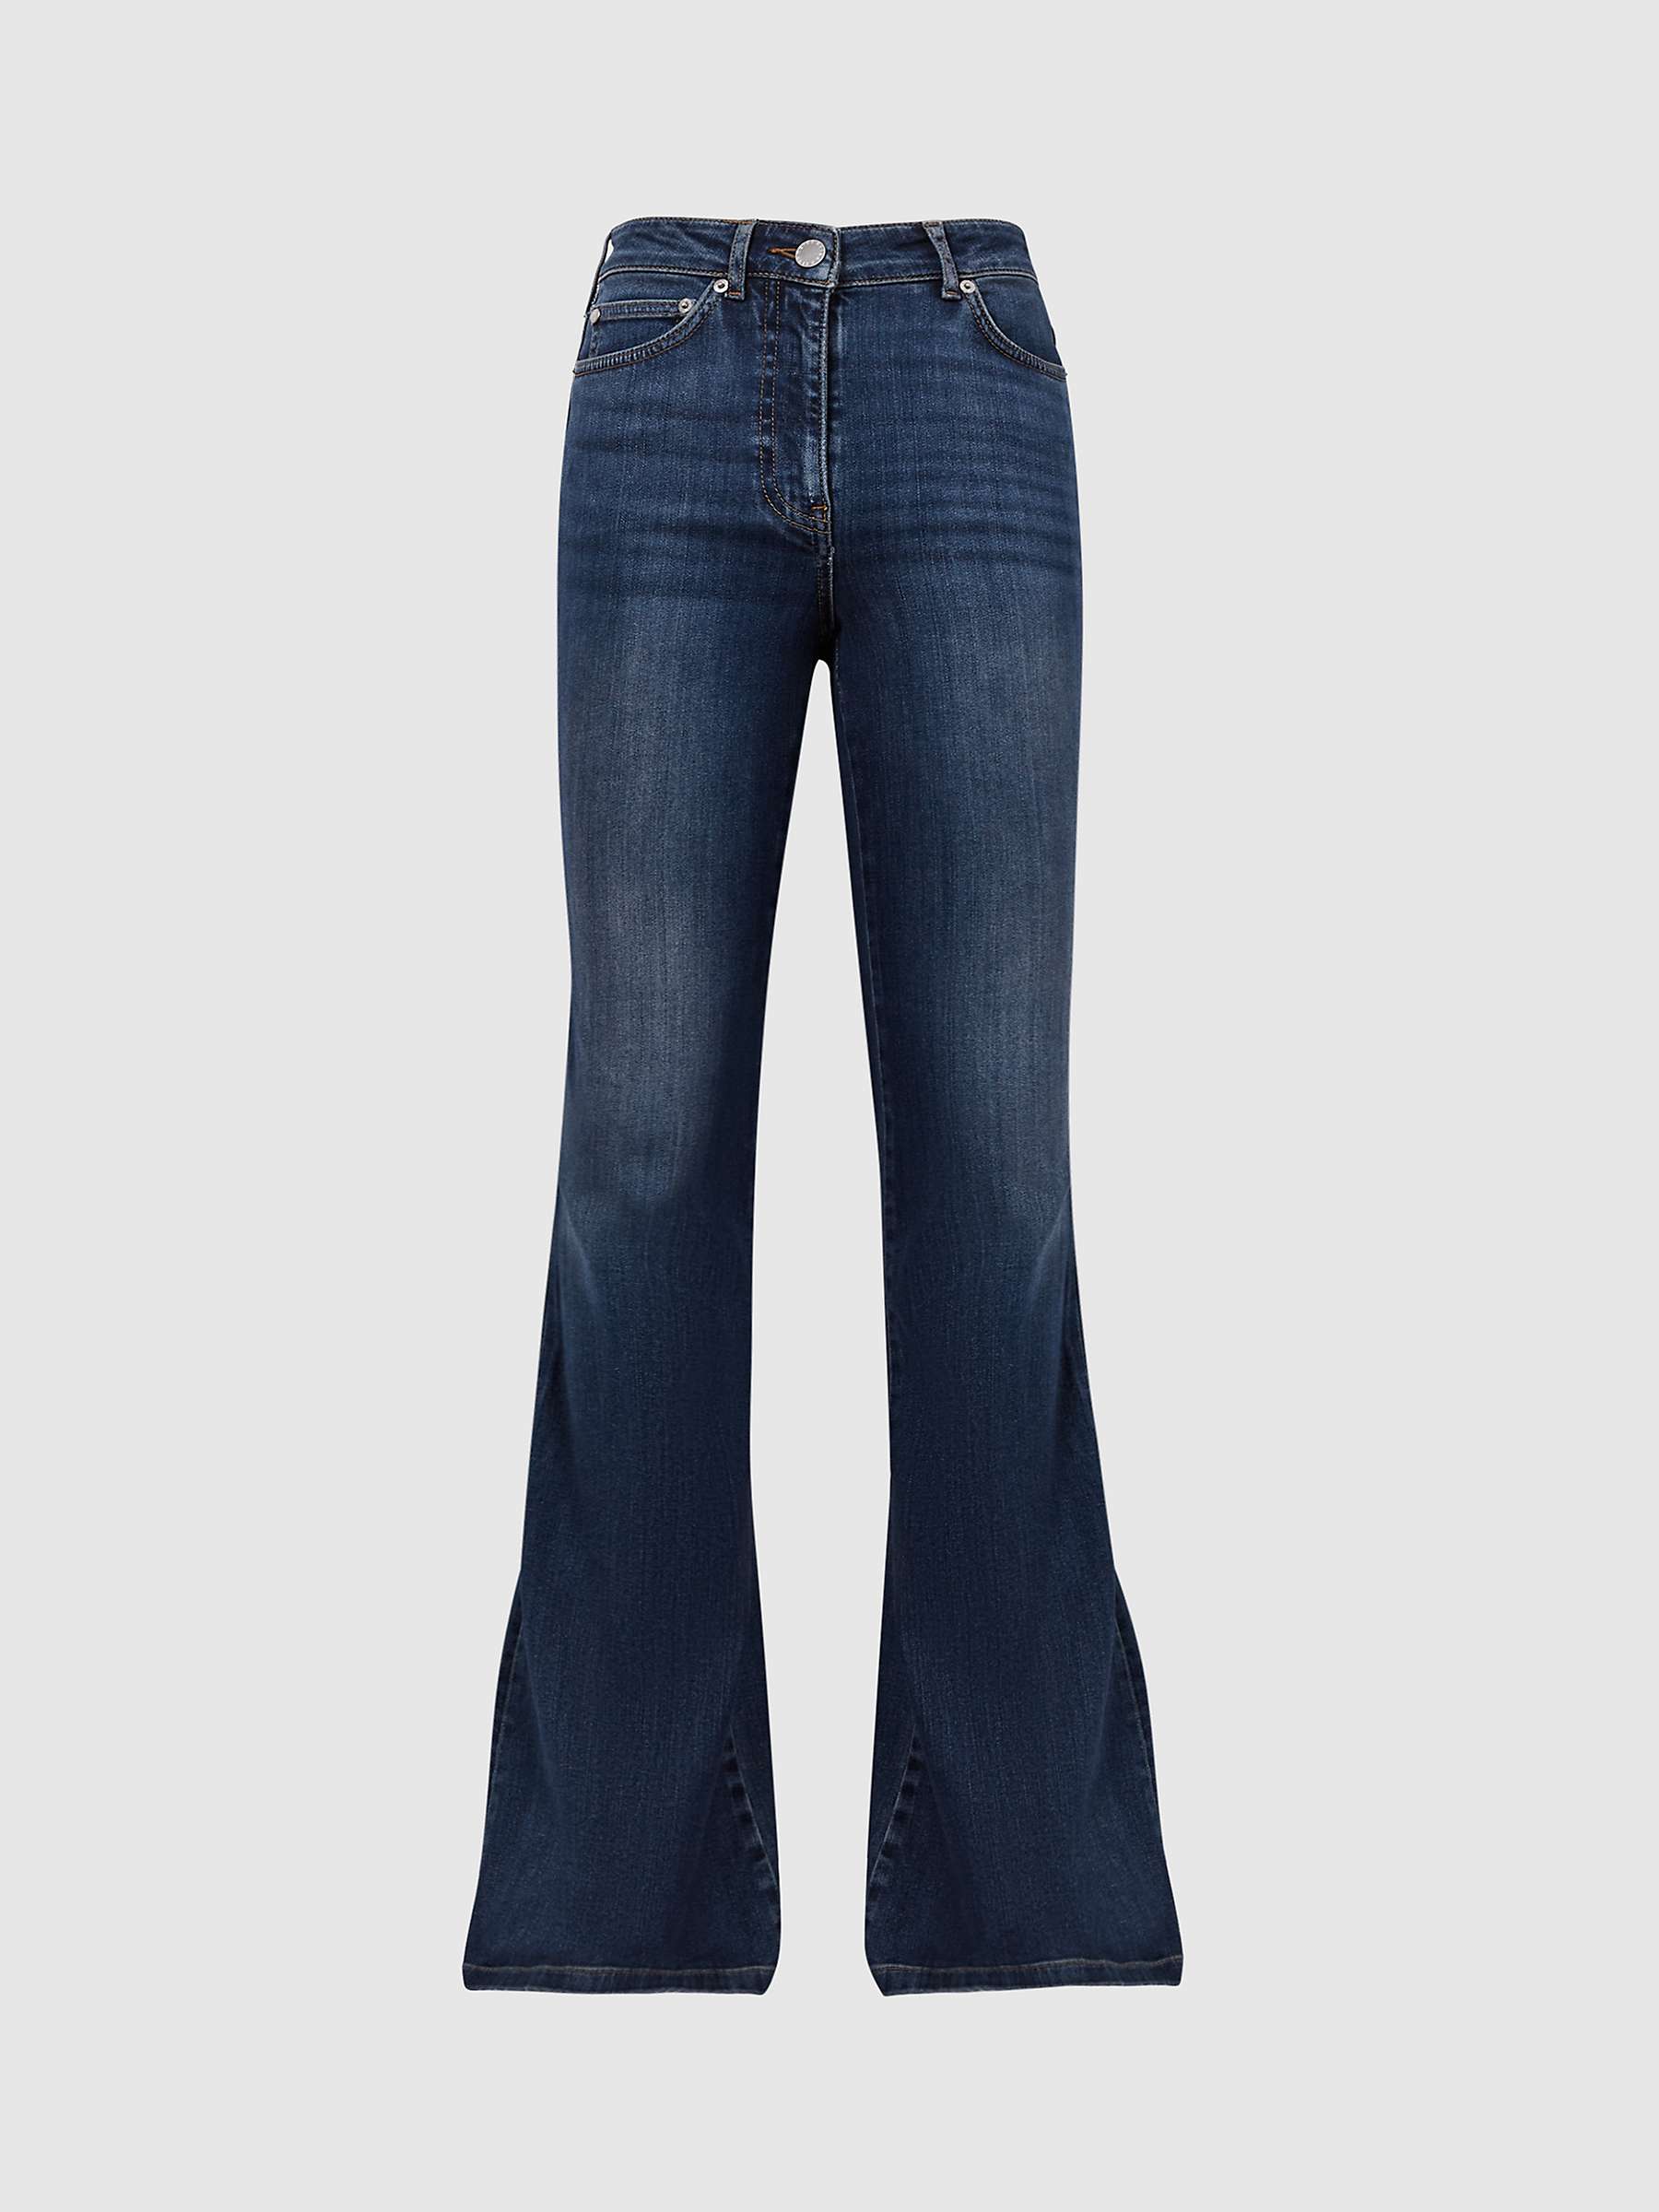 Buy Reiss Petite Beau Skinny Flared Jeans Online at johnlewis.com